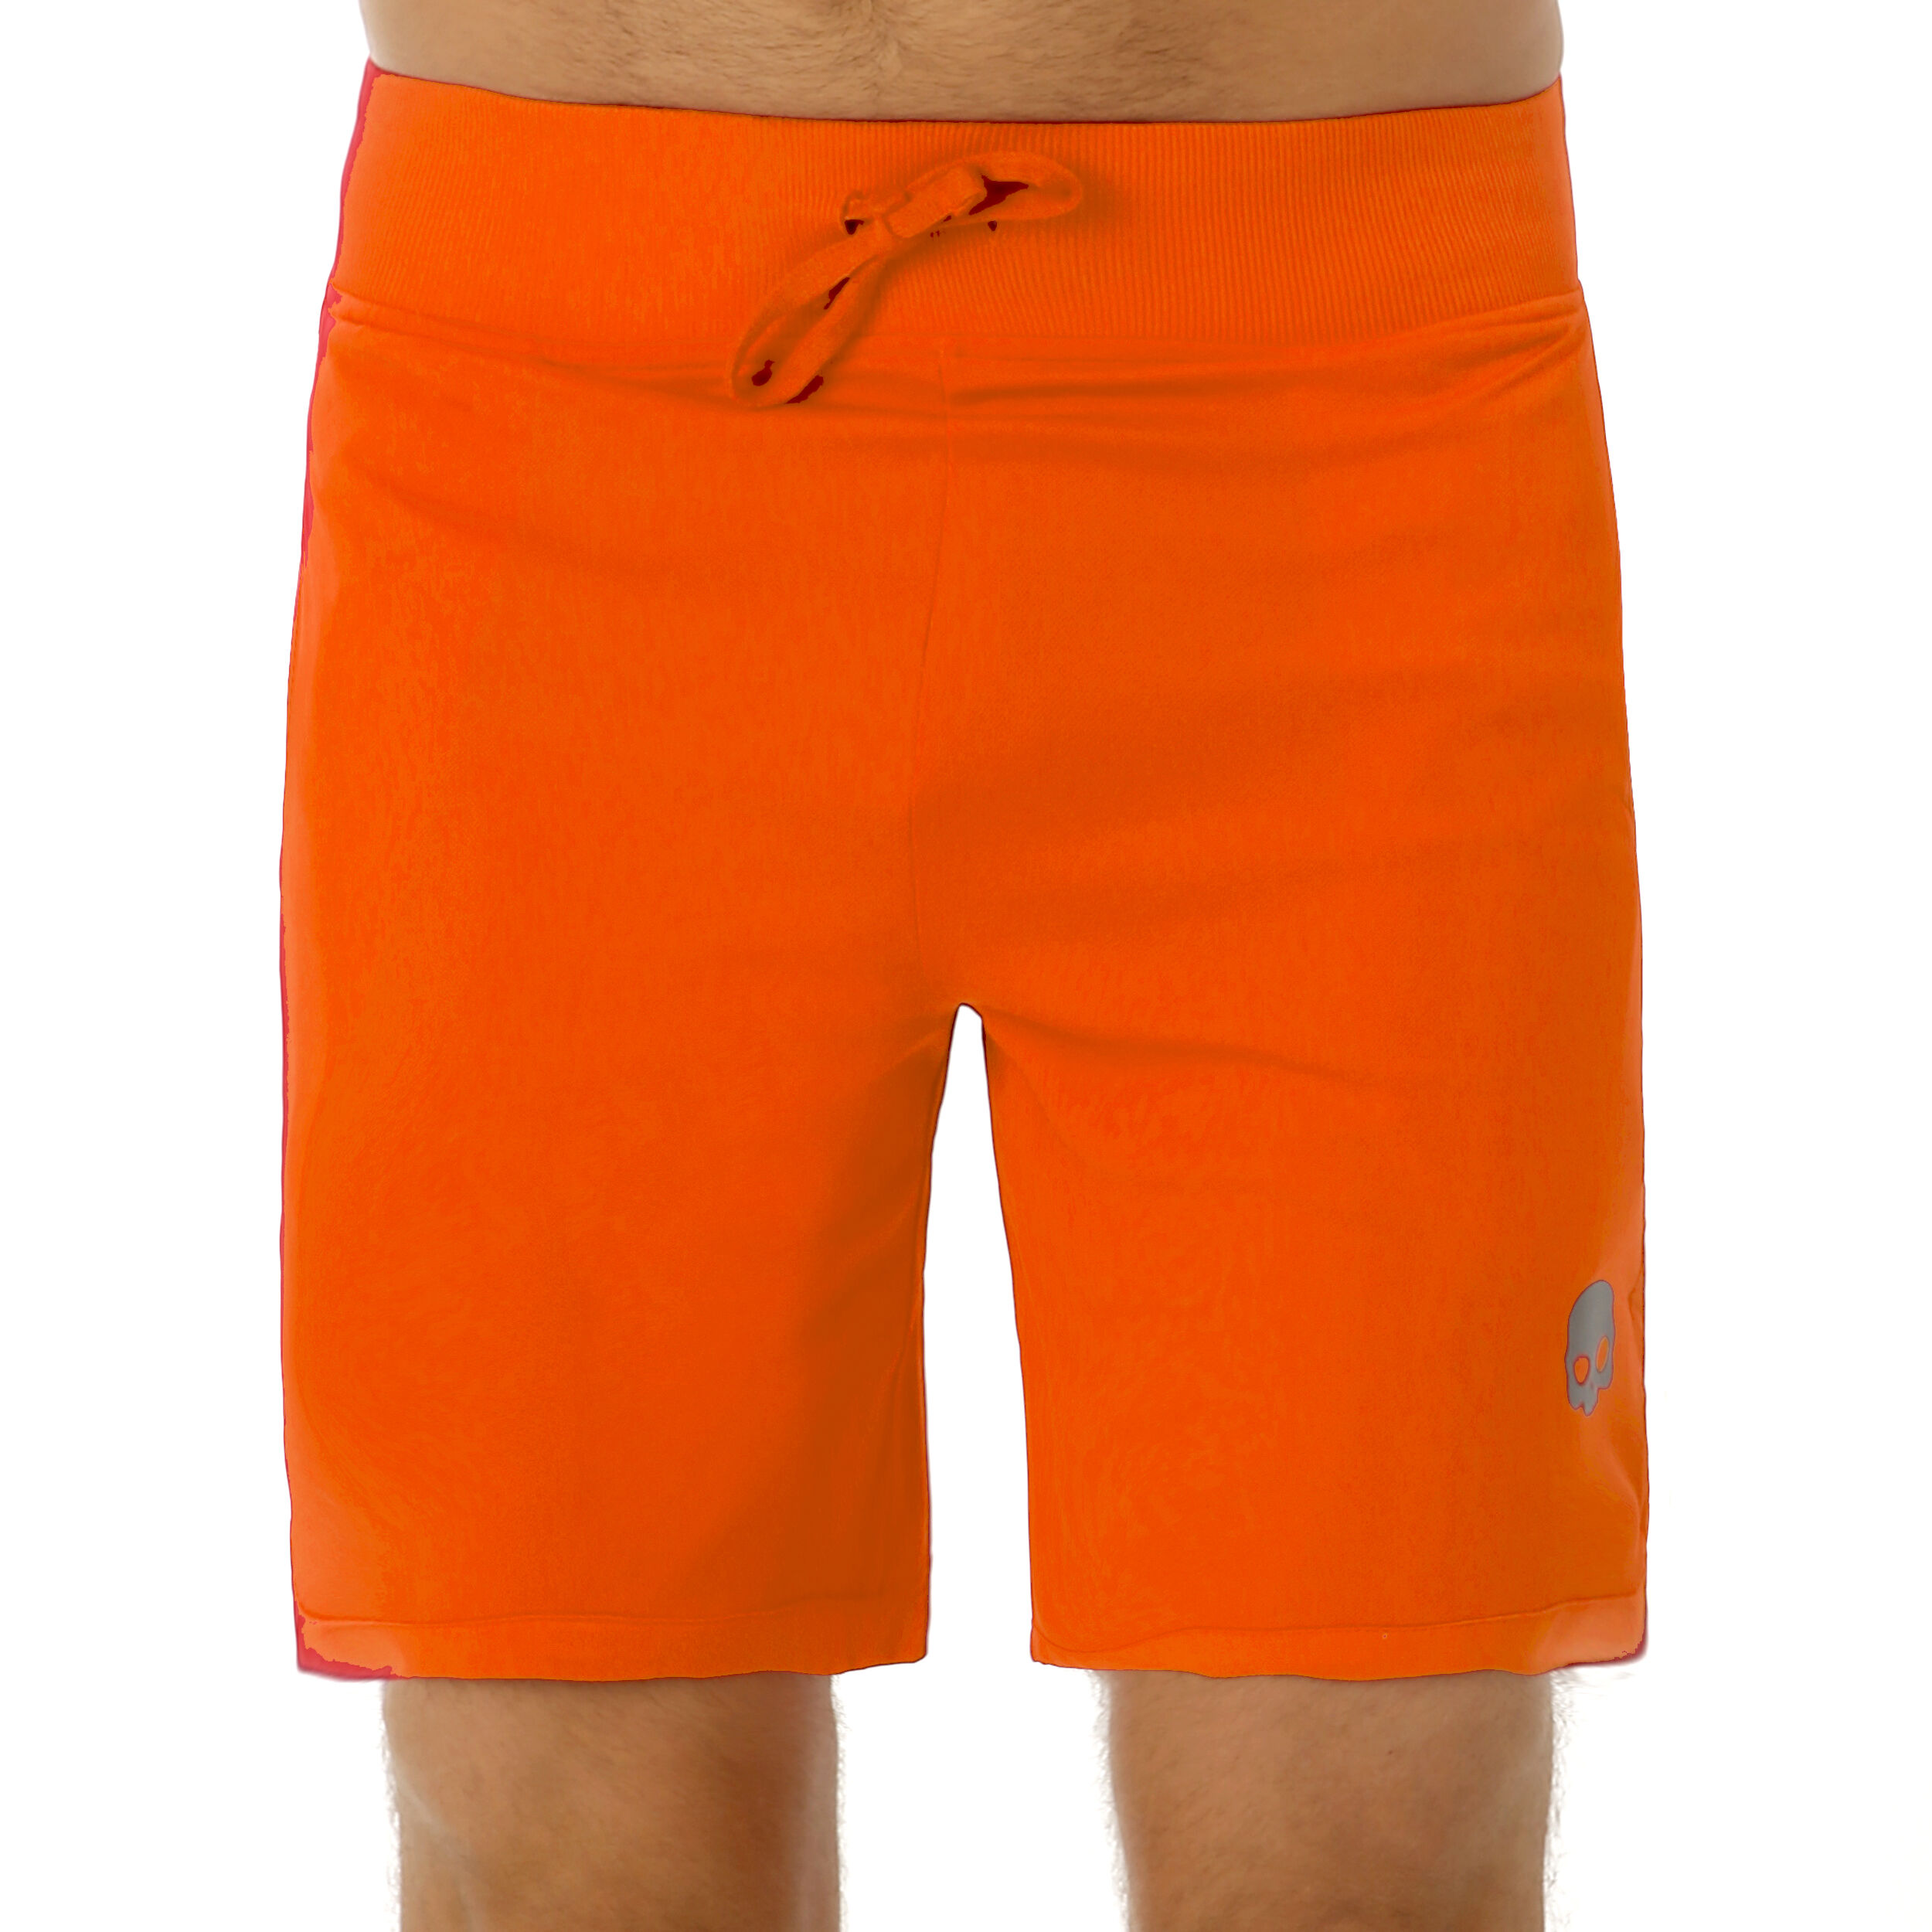 orange Neu S  weiss INSIDE Herren Tennis-Hose  Sport-Hose Hose   Gr 